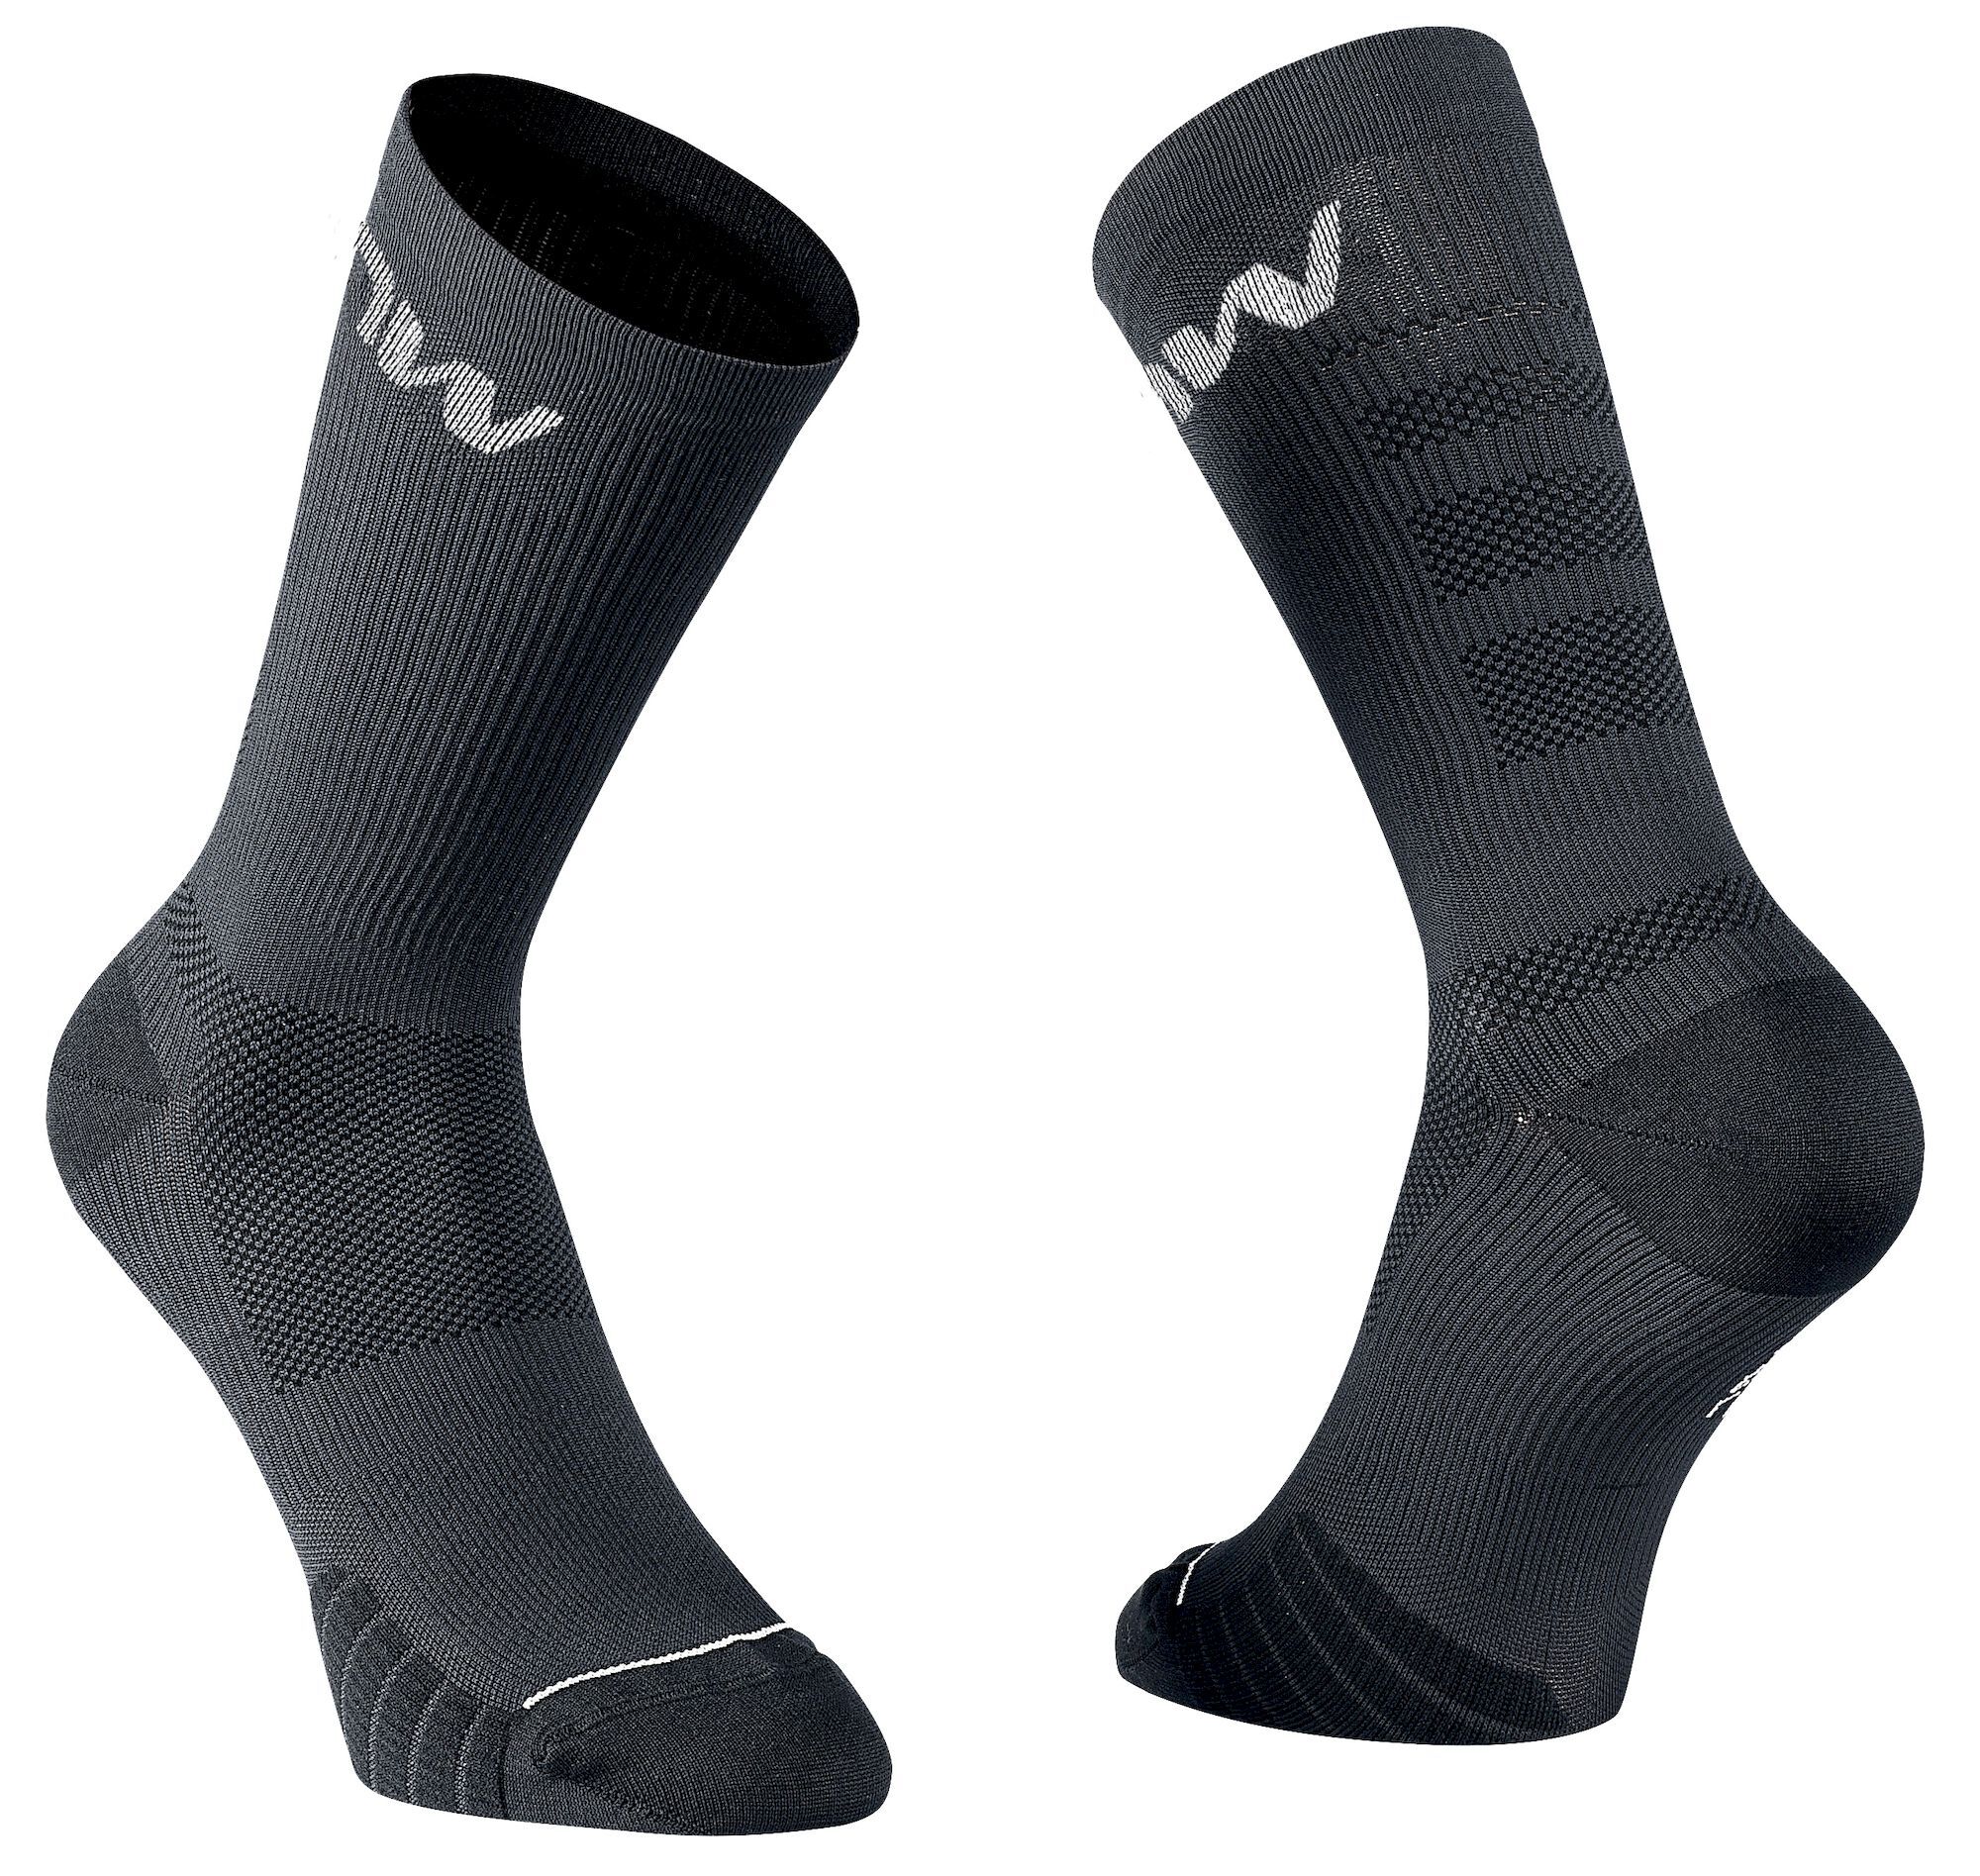 Northwave Extreme Pro Sock - Cycling socks - Men's